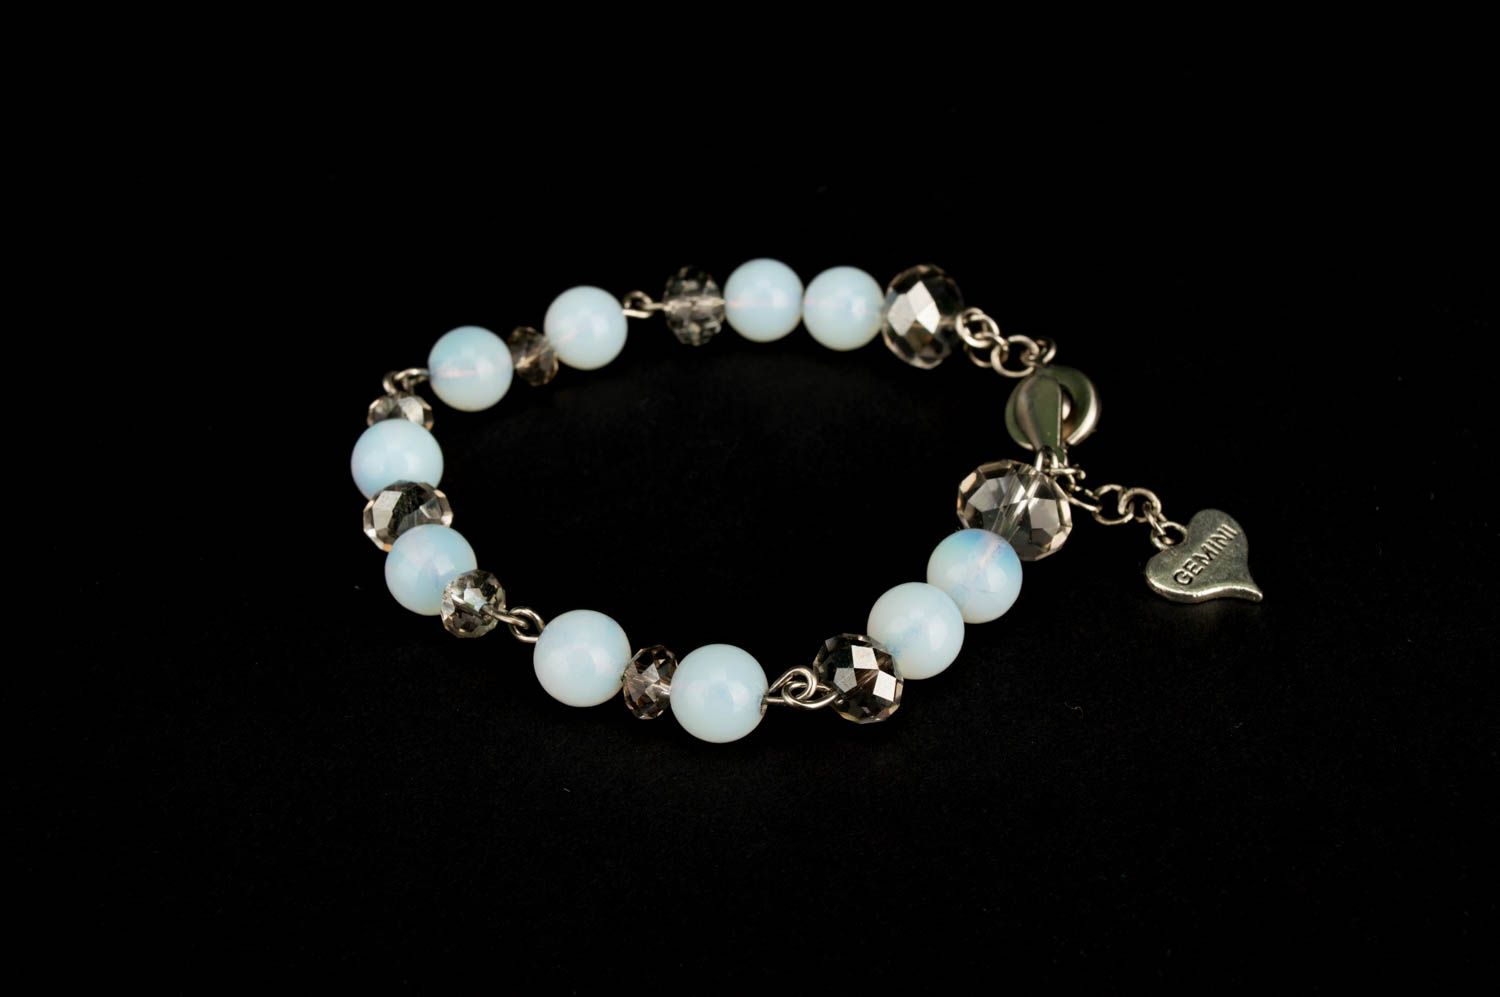 Transparent beads adjustable bracelet with heart shape charm for women photo 4